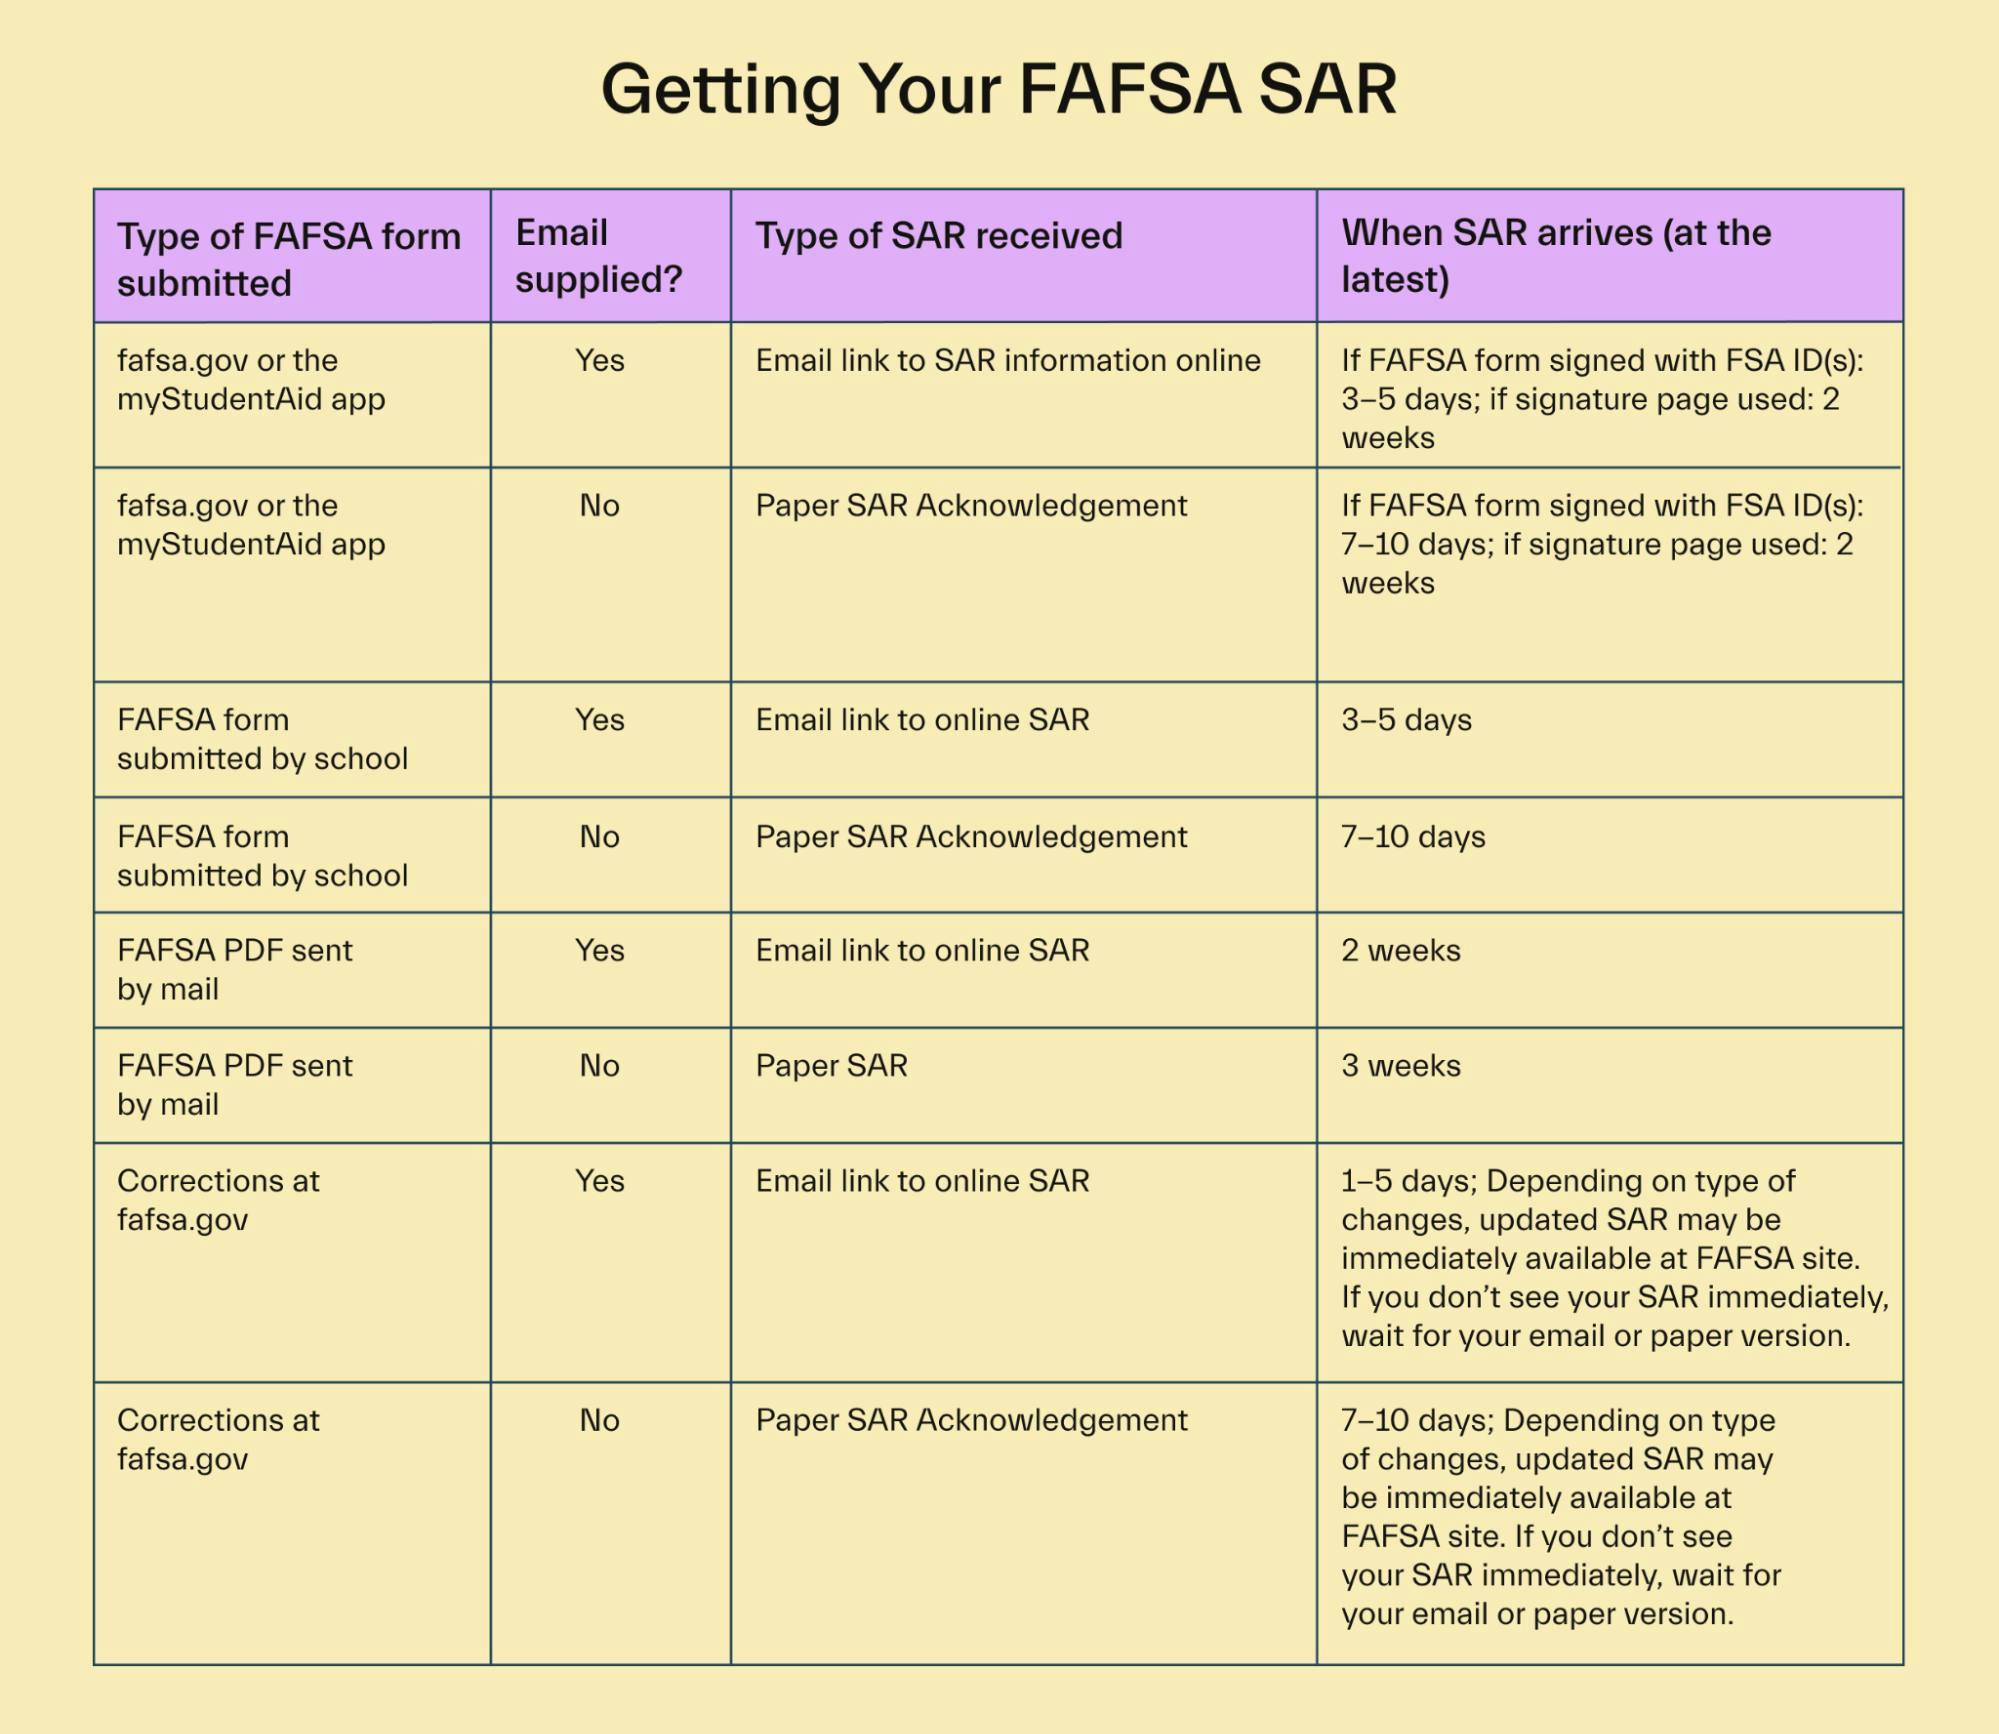 Getting your FAFSA SAR